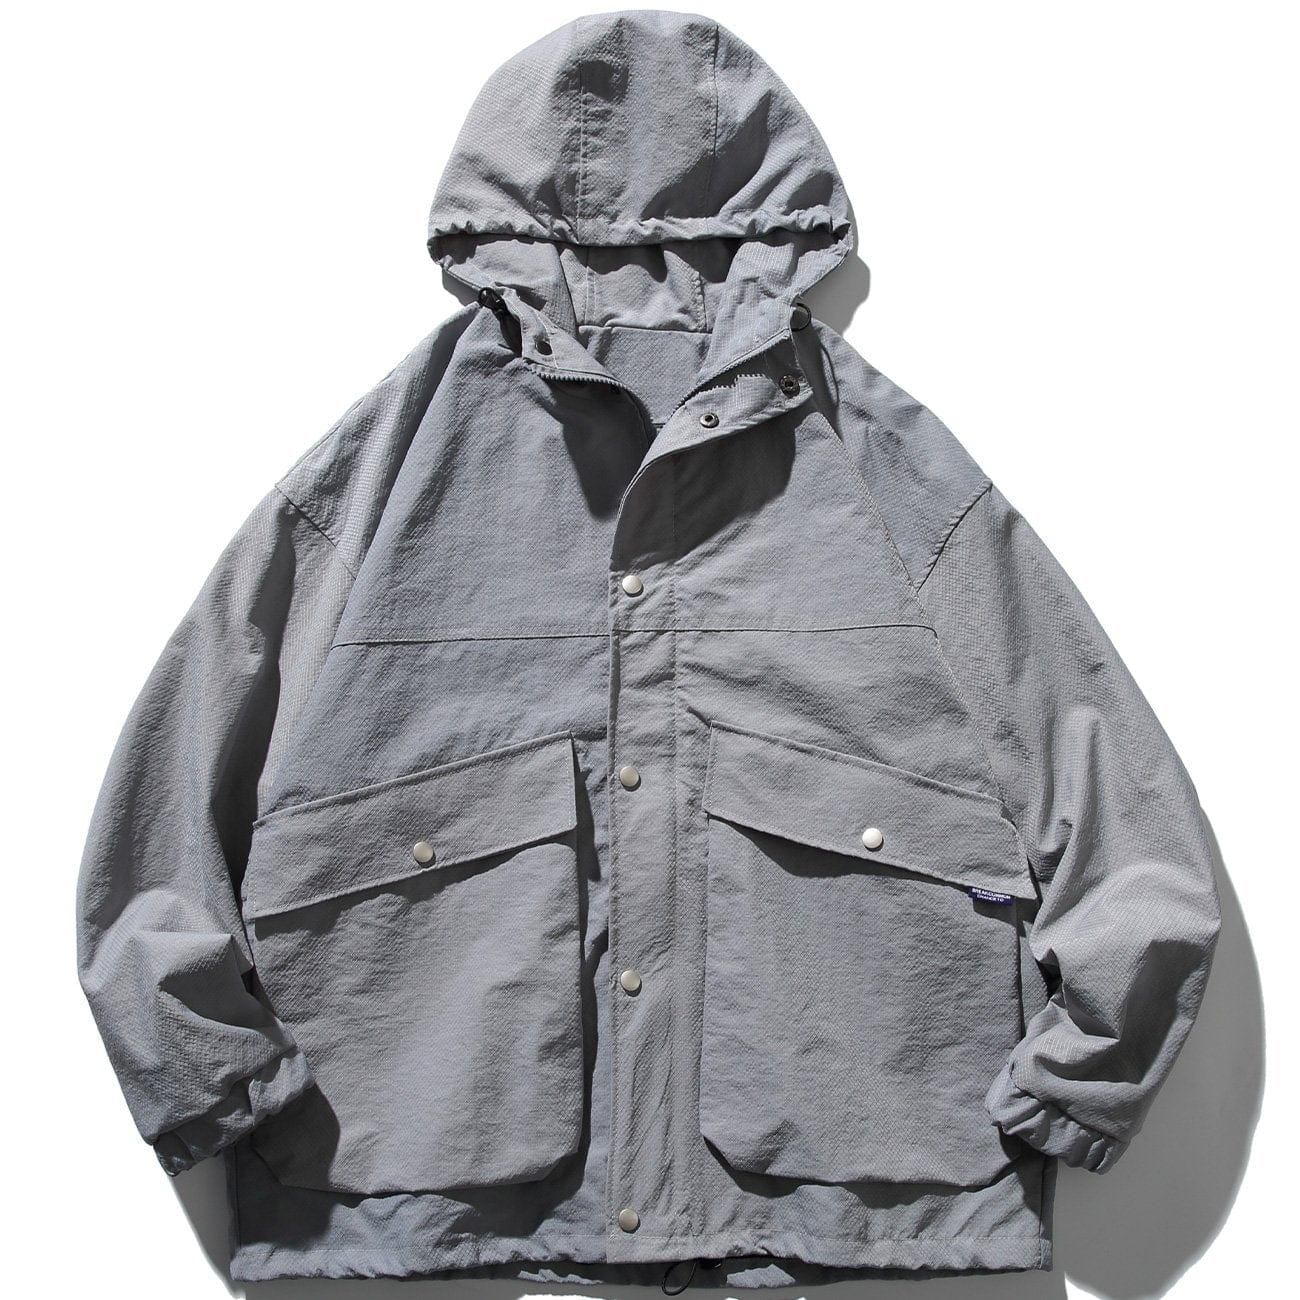 Majesda® - Solid Mesh Hooded Jacket outfit ideas, streetwear fashion - majesda.com